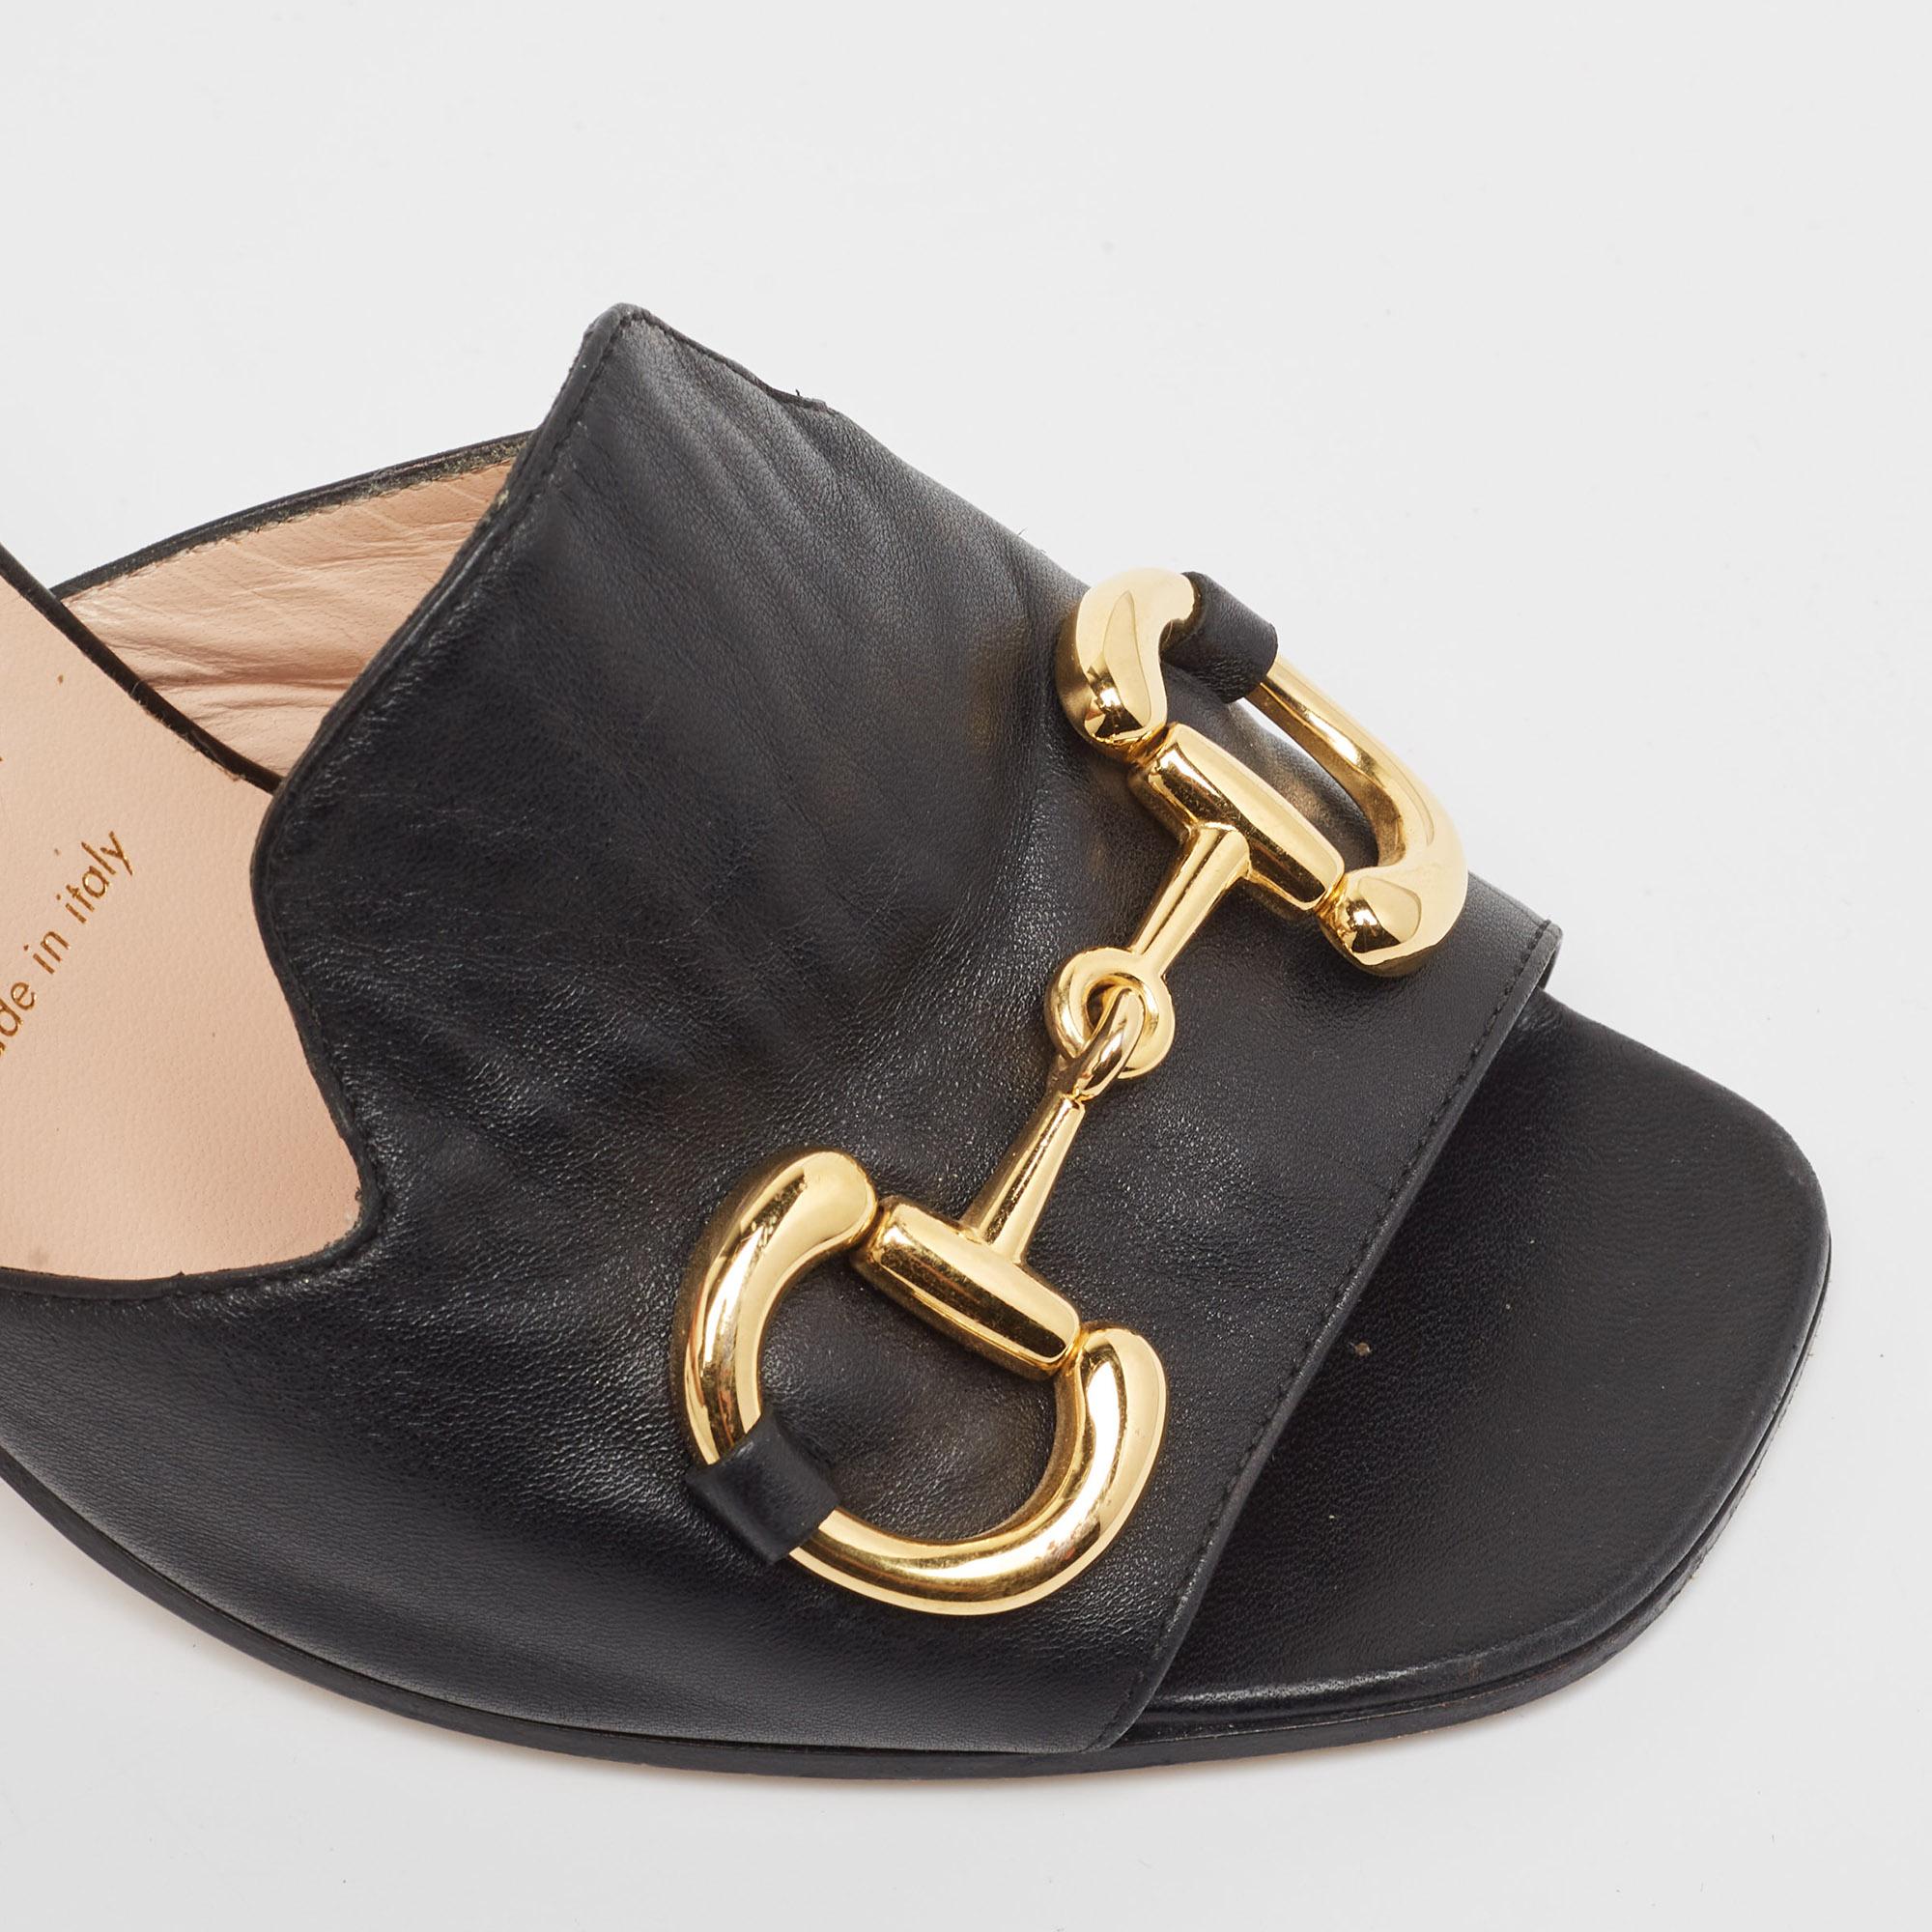 Gucci Back Leather Horsebit Slide Sandals Size 37.5 For Sale 2